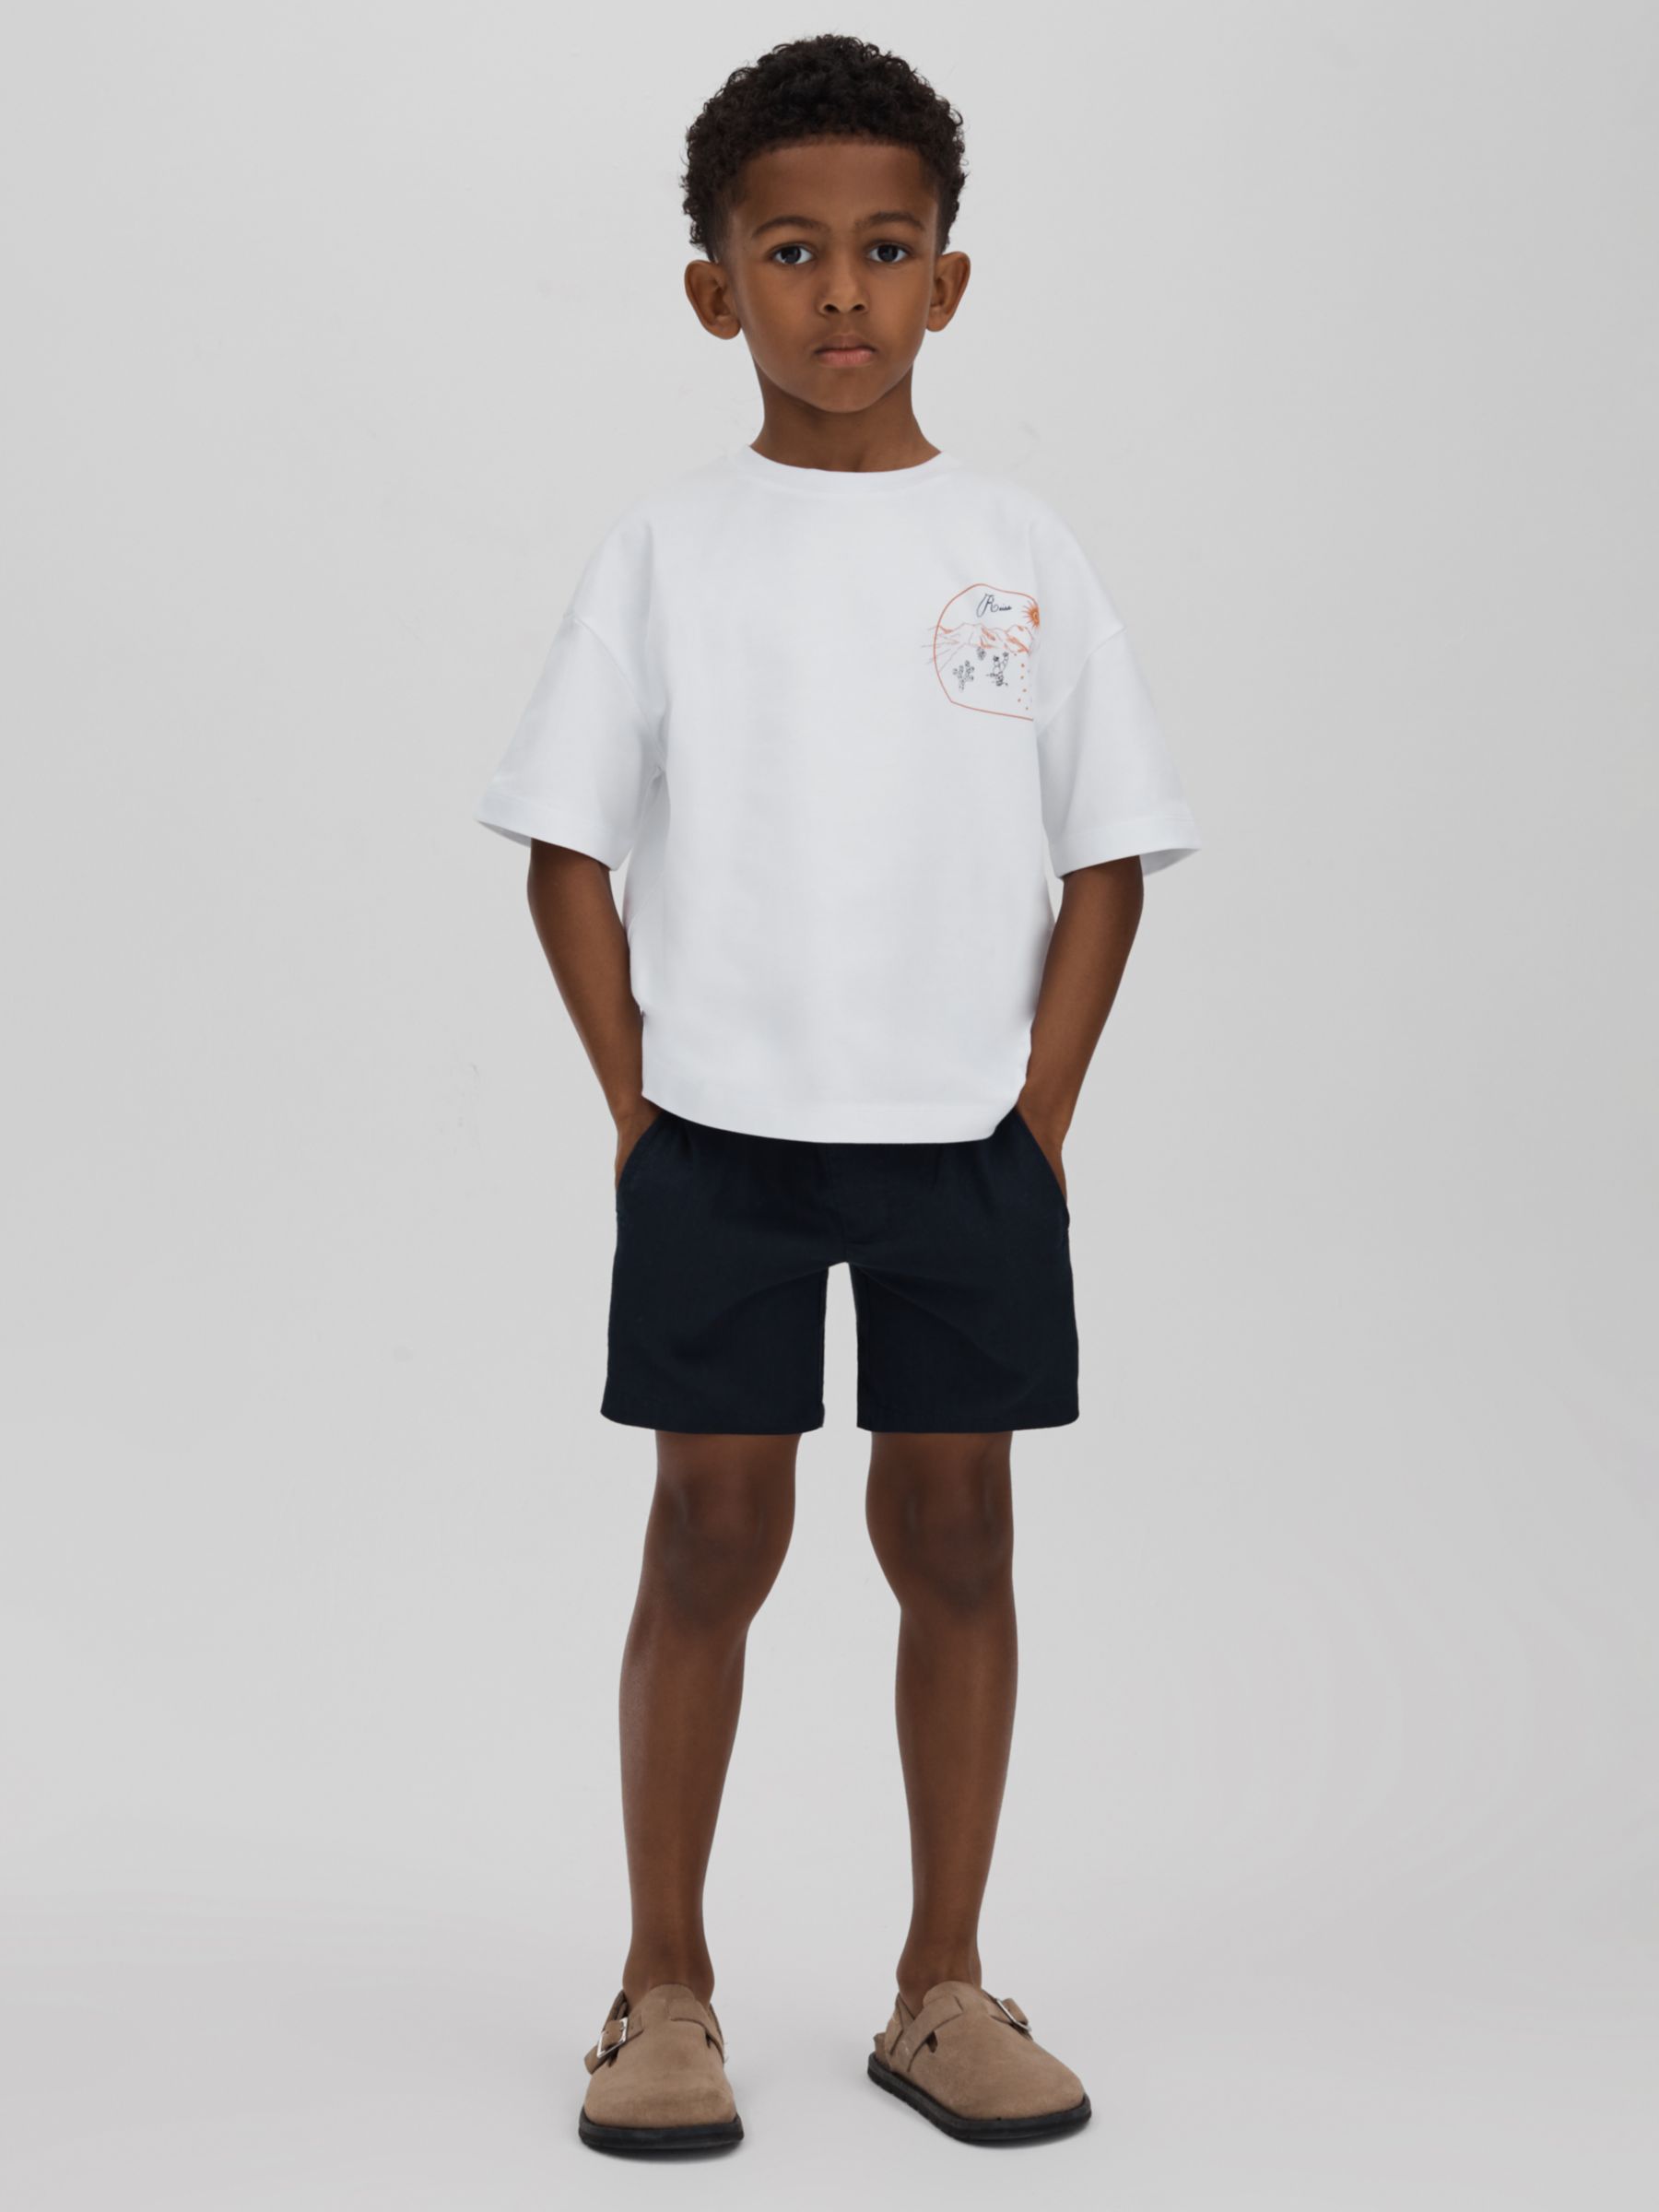 Reiss Kids' Monte Back Graphic T-Shirt, Optic White/Multi, 3-4 years